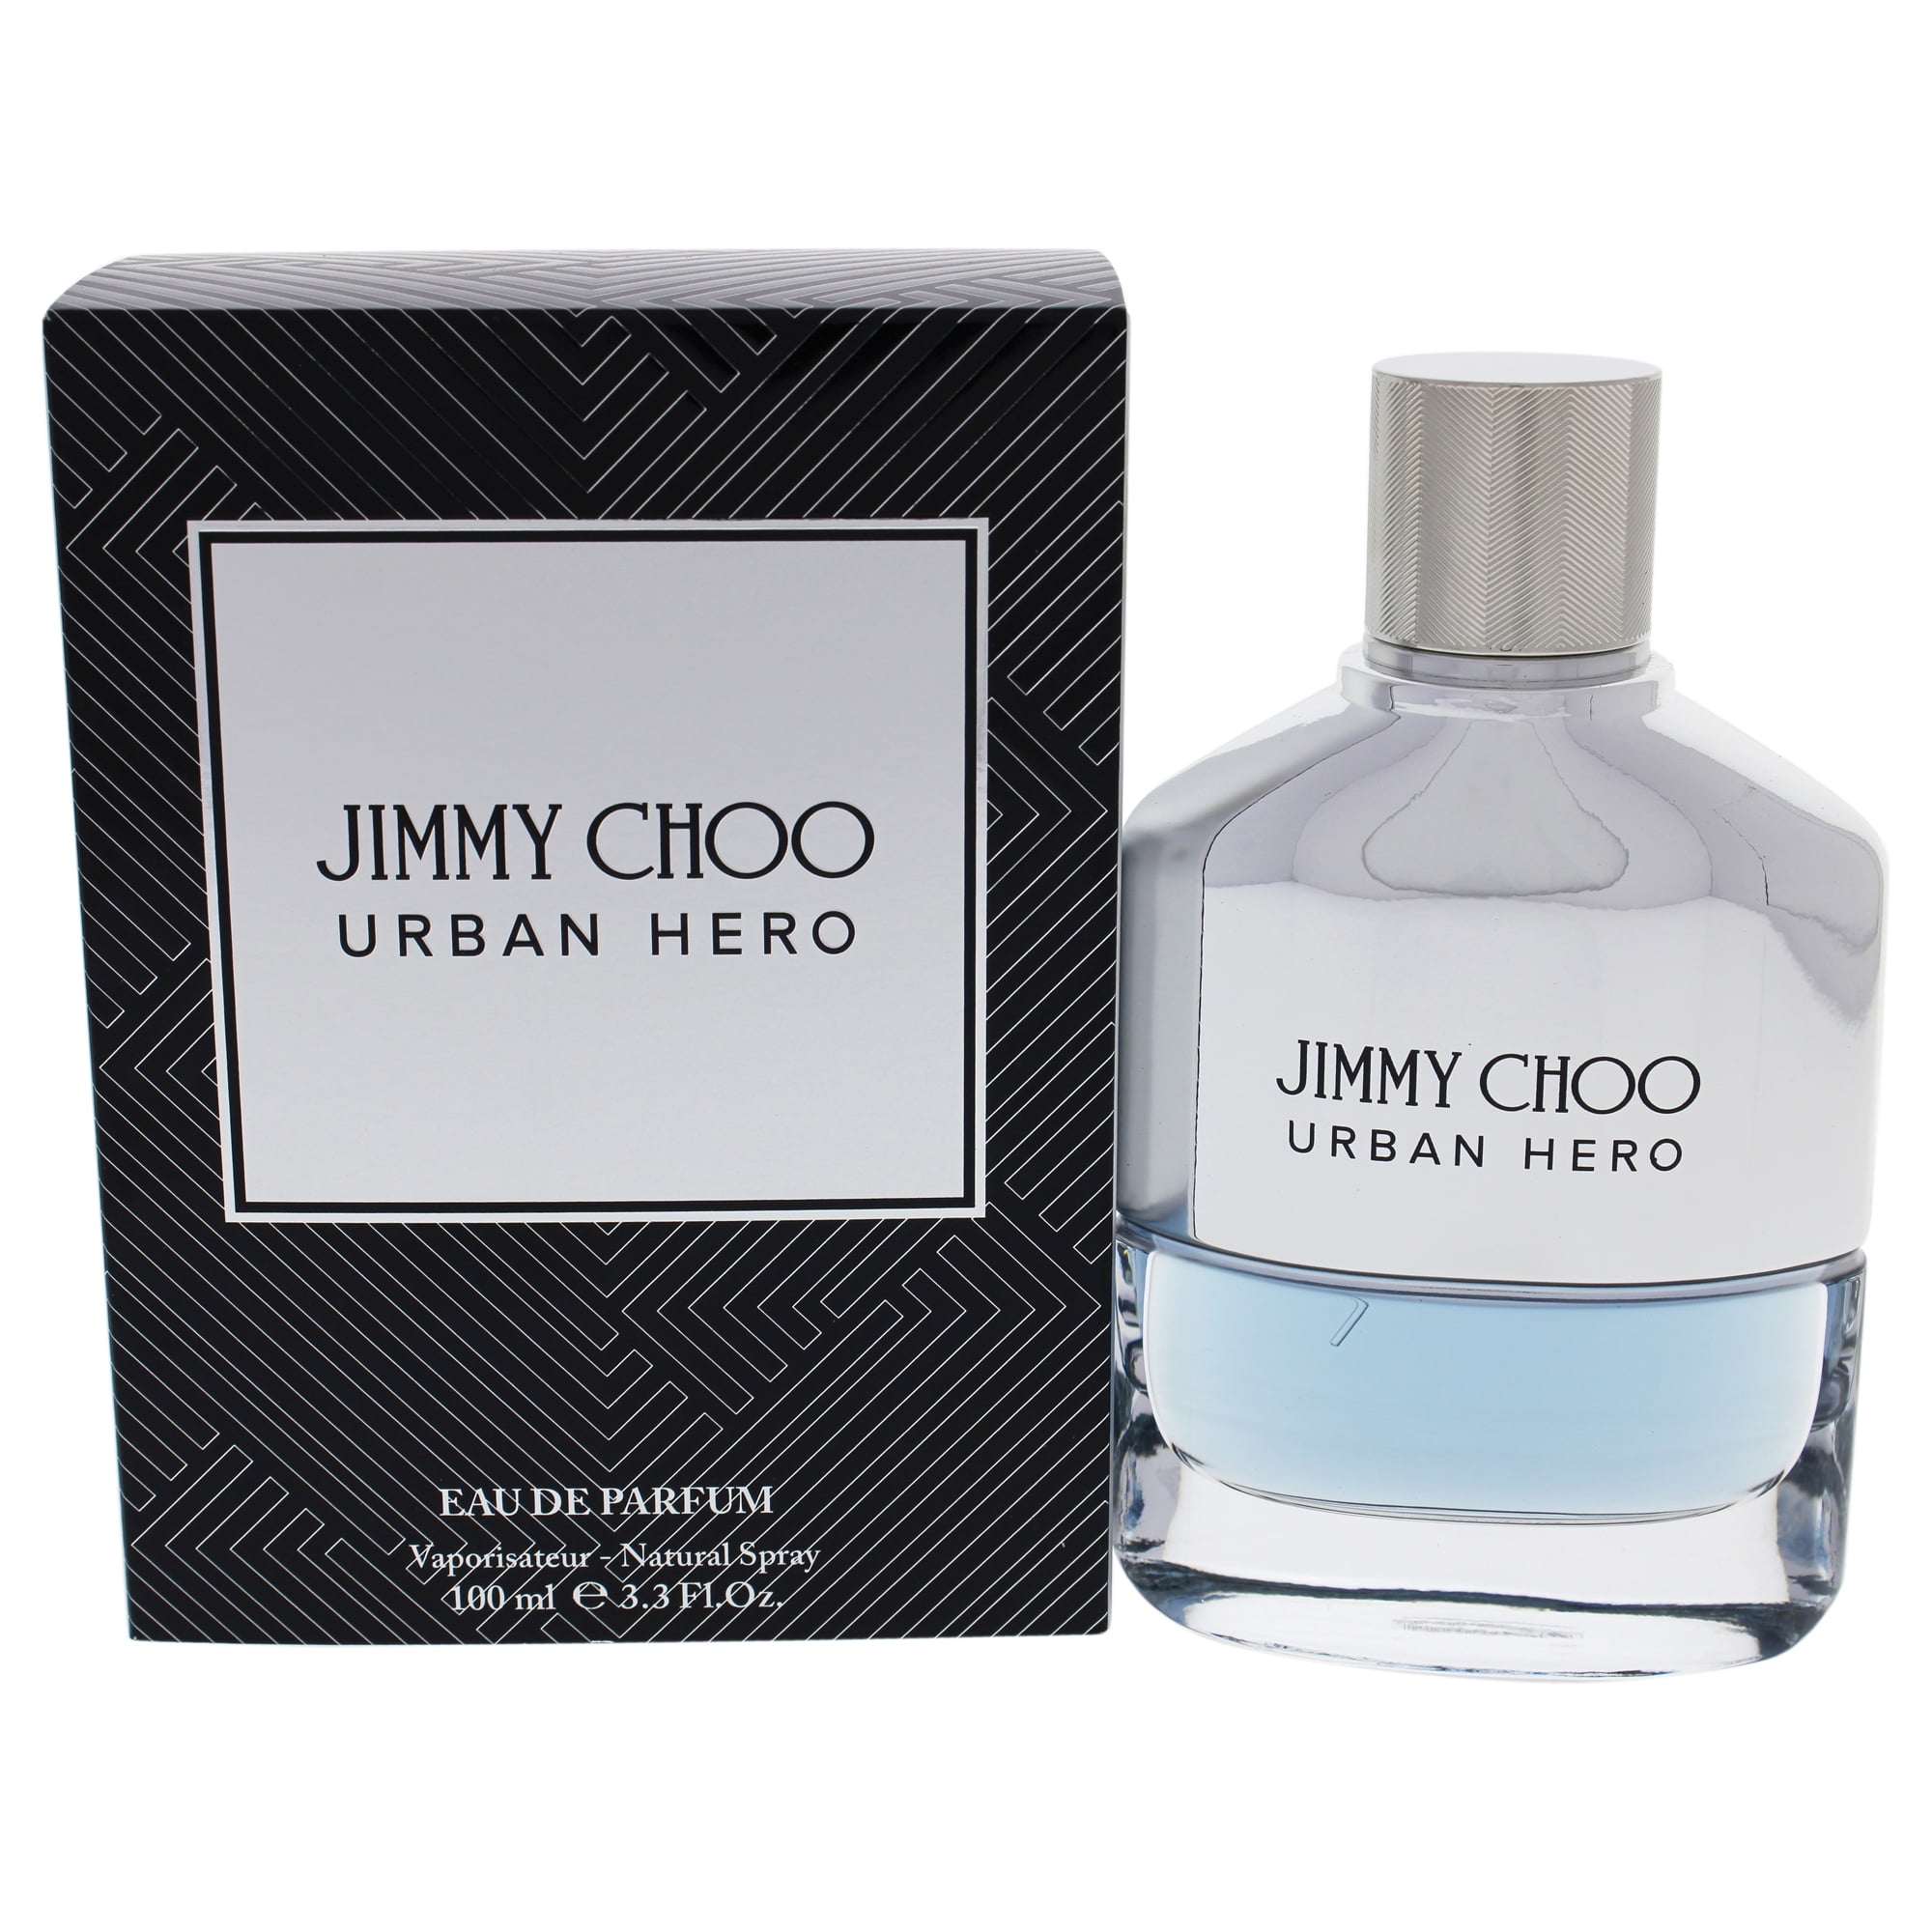 Jimmy Choo Urban Hero Eau de Parfum 